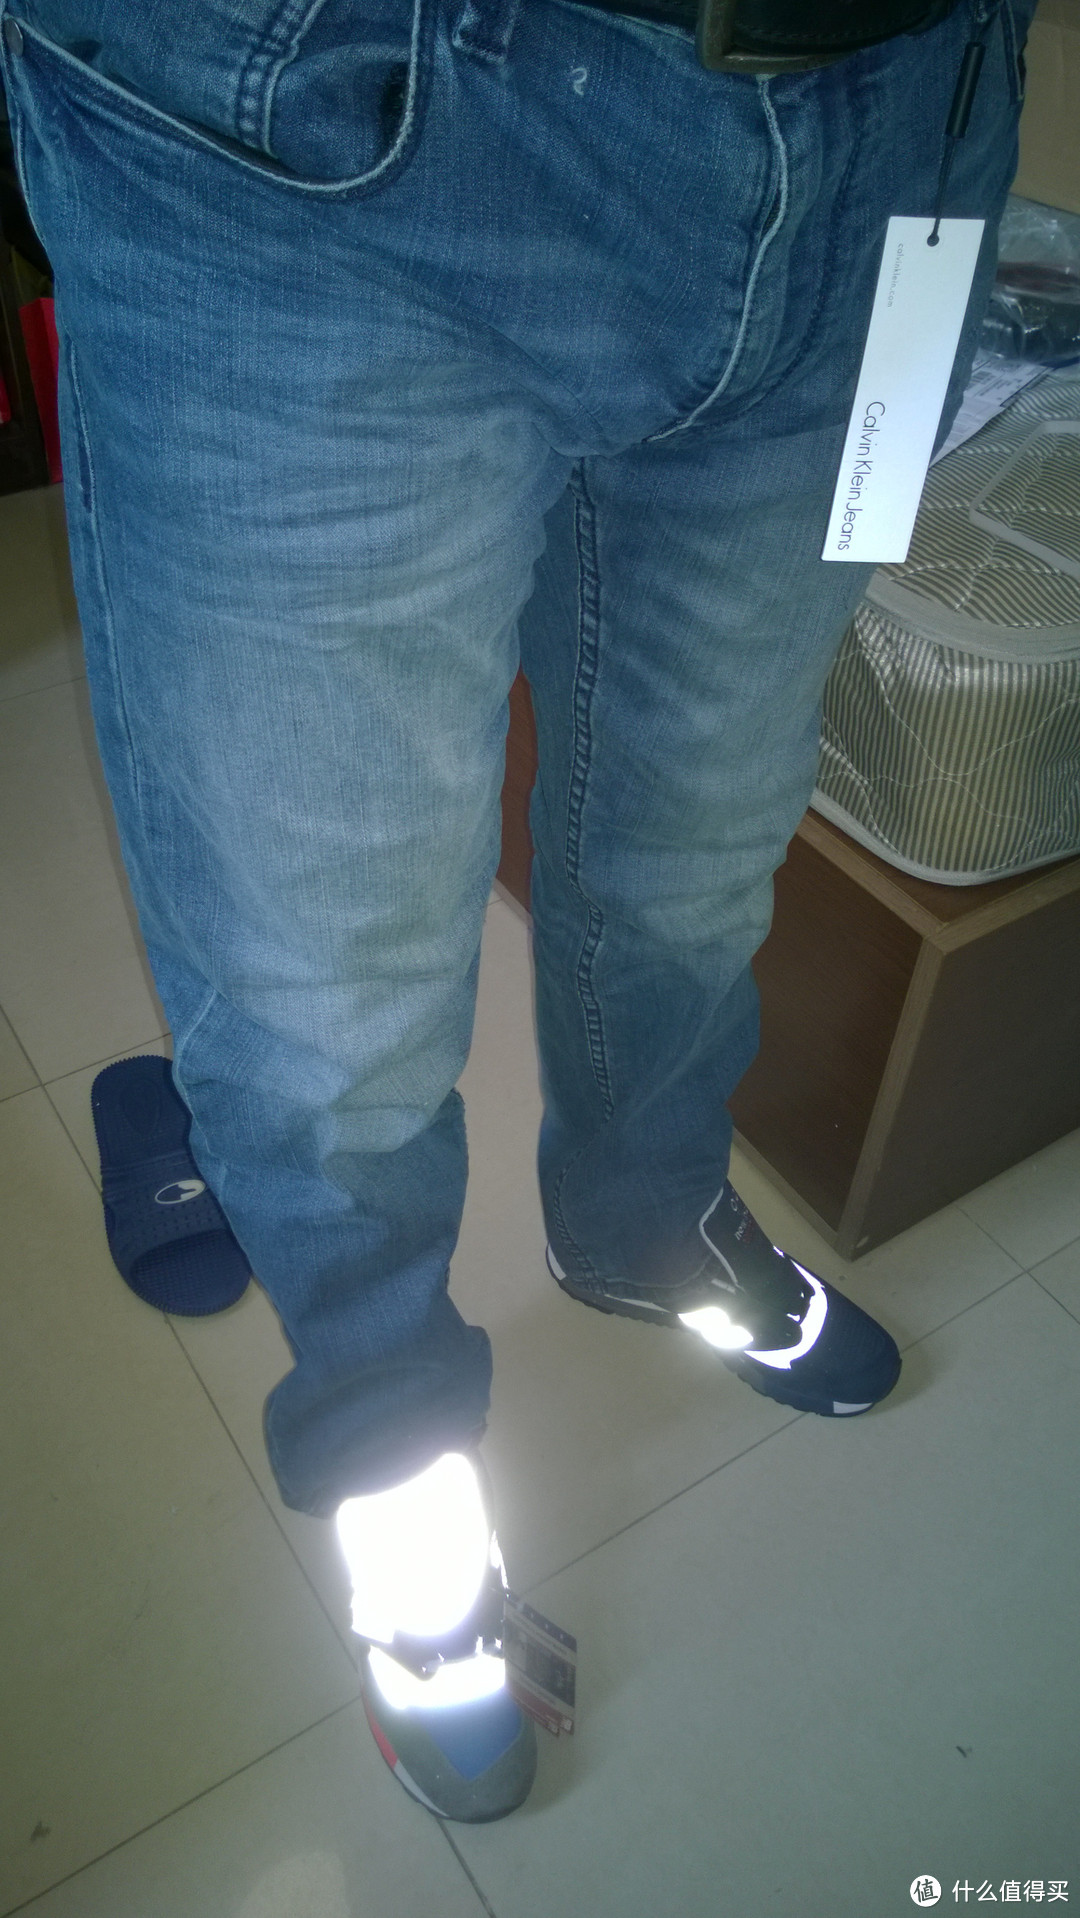 New Balance 新百伦 JC1、JC3 慢跑鞋 +  Calvin Klein Jeans Straight Leg Jean In Supernova 男款直筒牛仔裤 + 哥伦比亚腰带